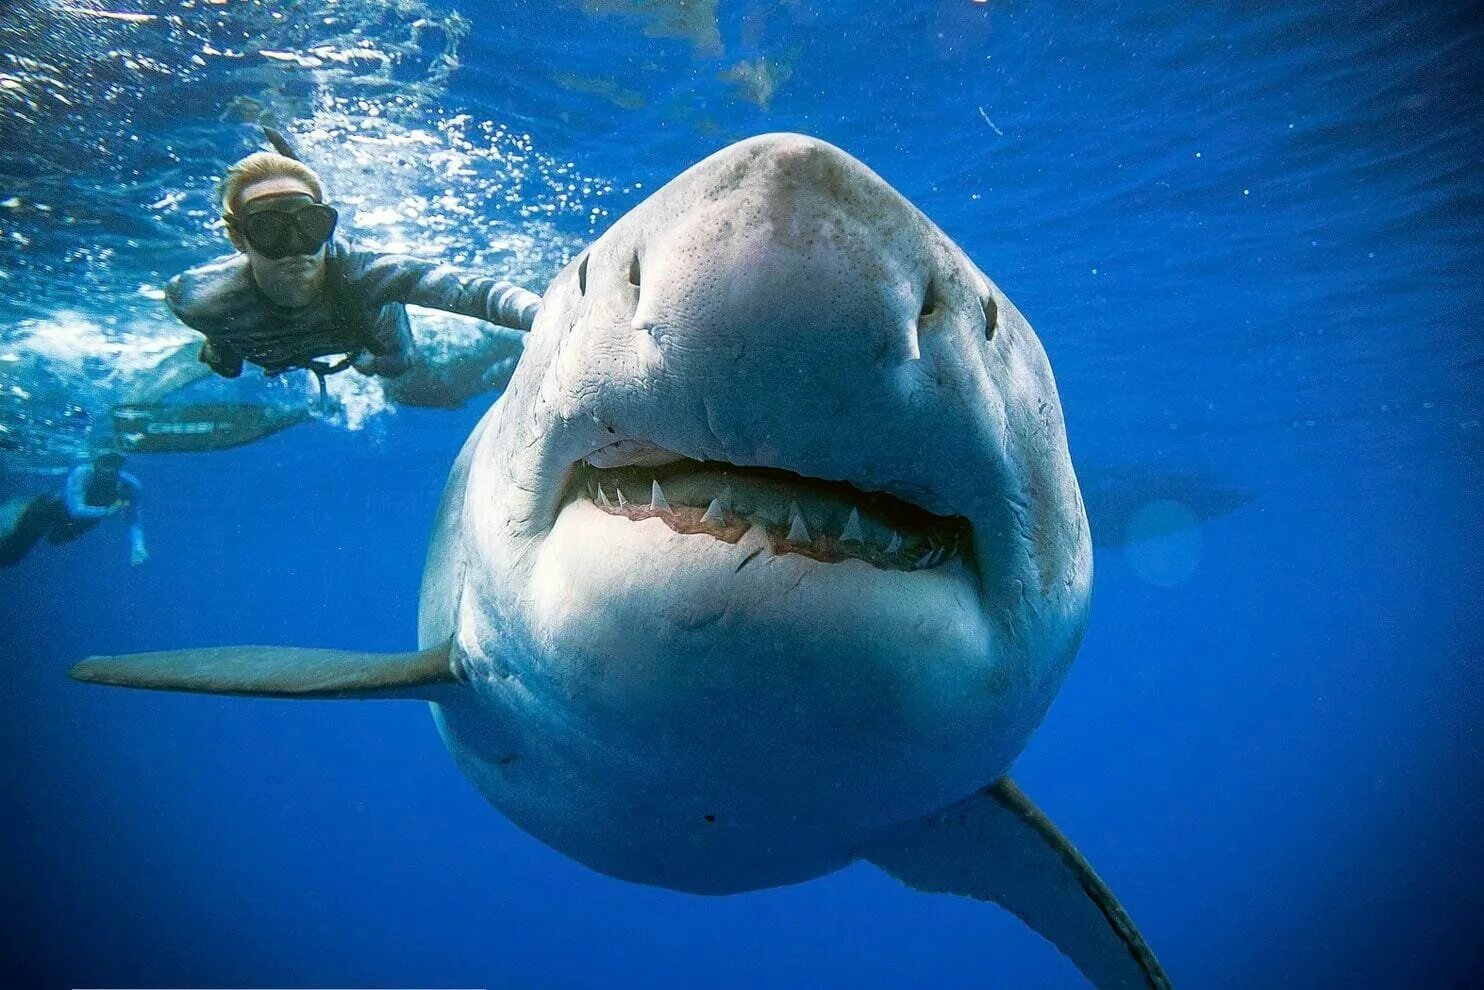 Фотки больших акул. Белая акула дип Блю. Большая белая акула Deep Blue. Большая белая акула кархародон. Самая большая белая акула дип Блю.